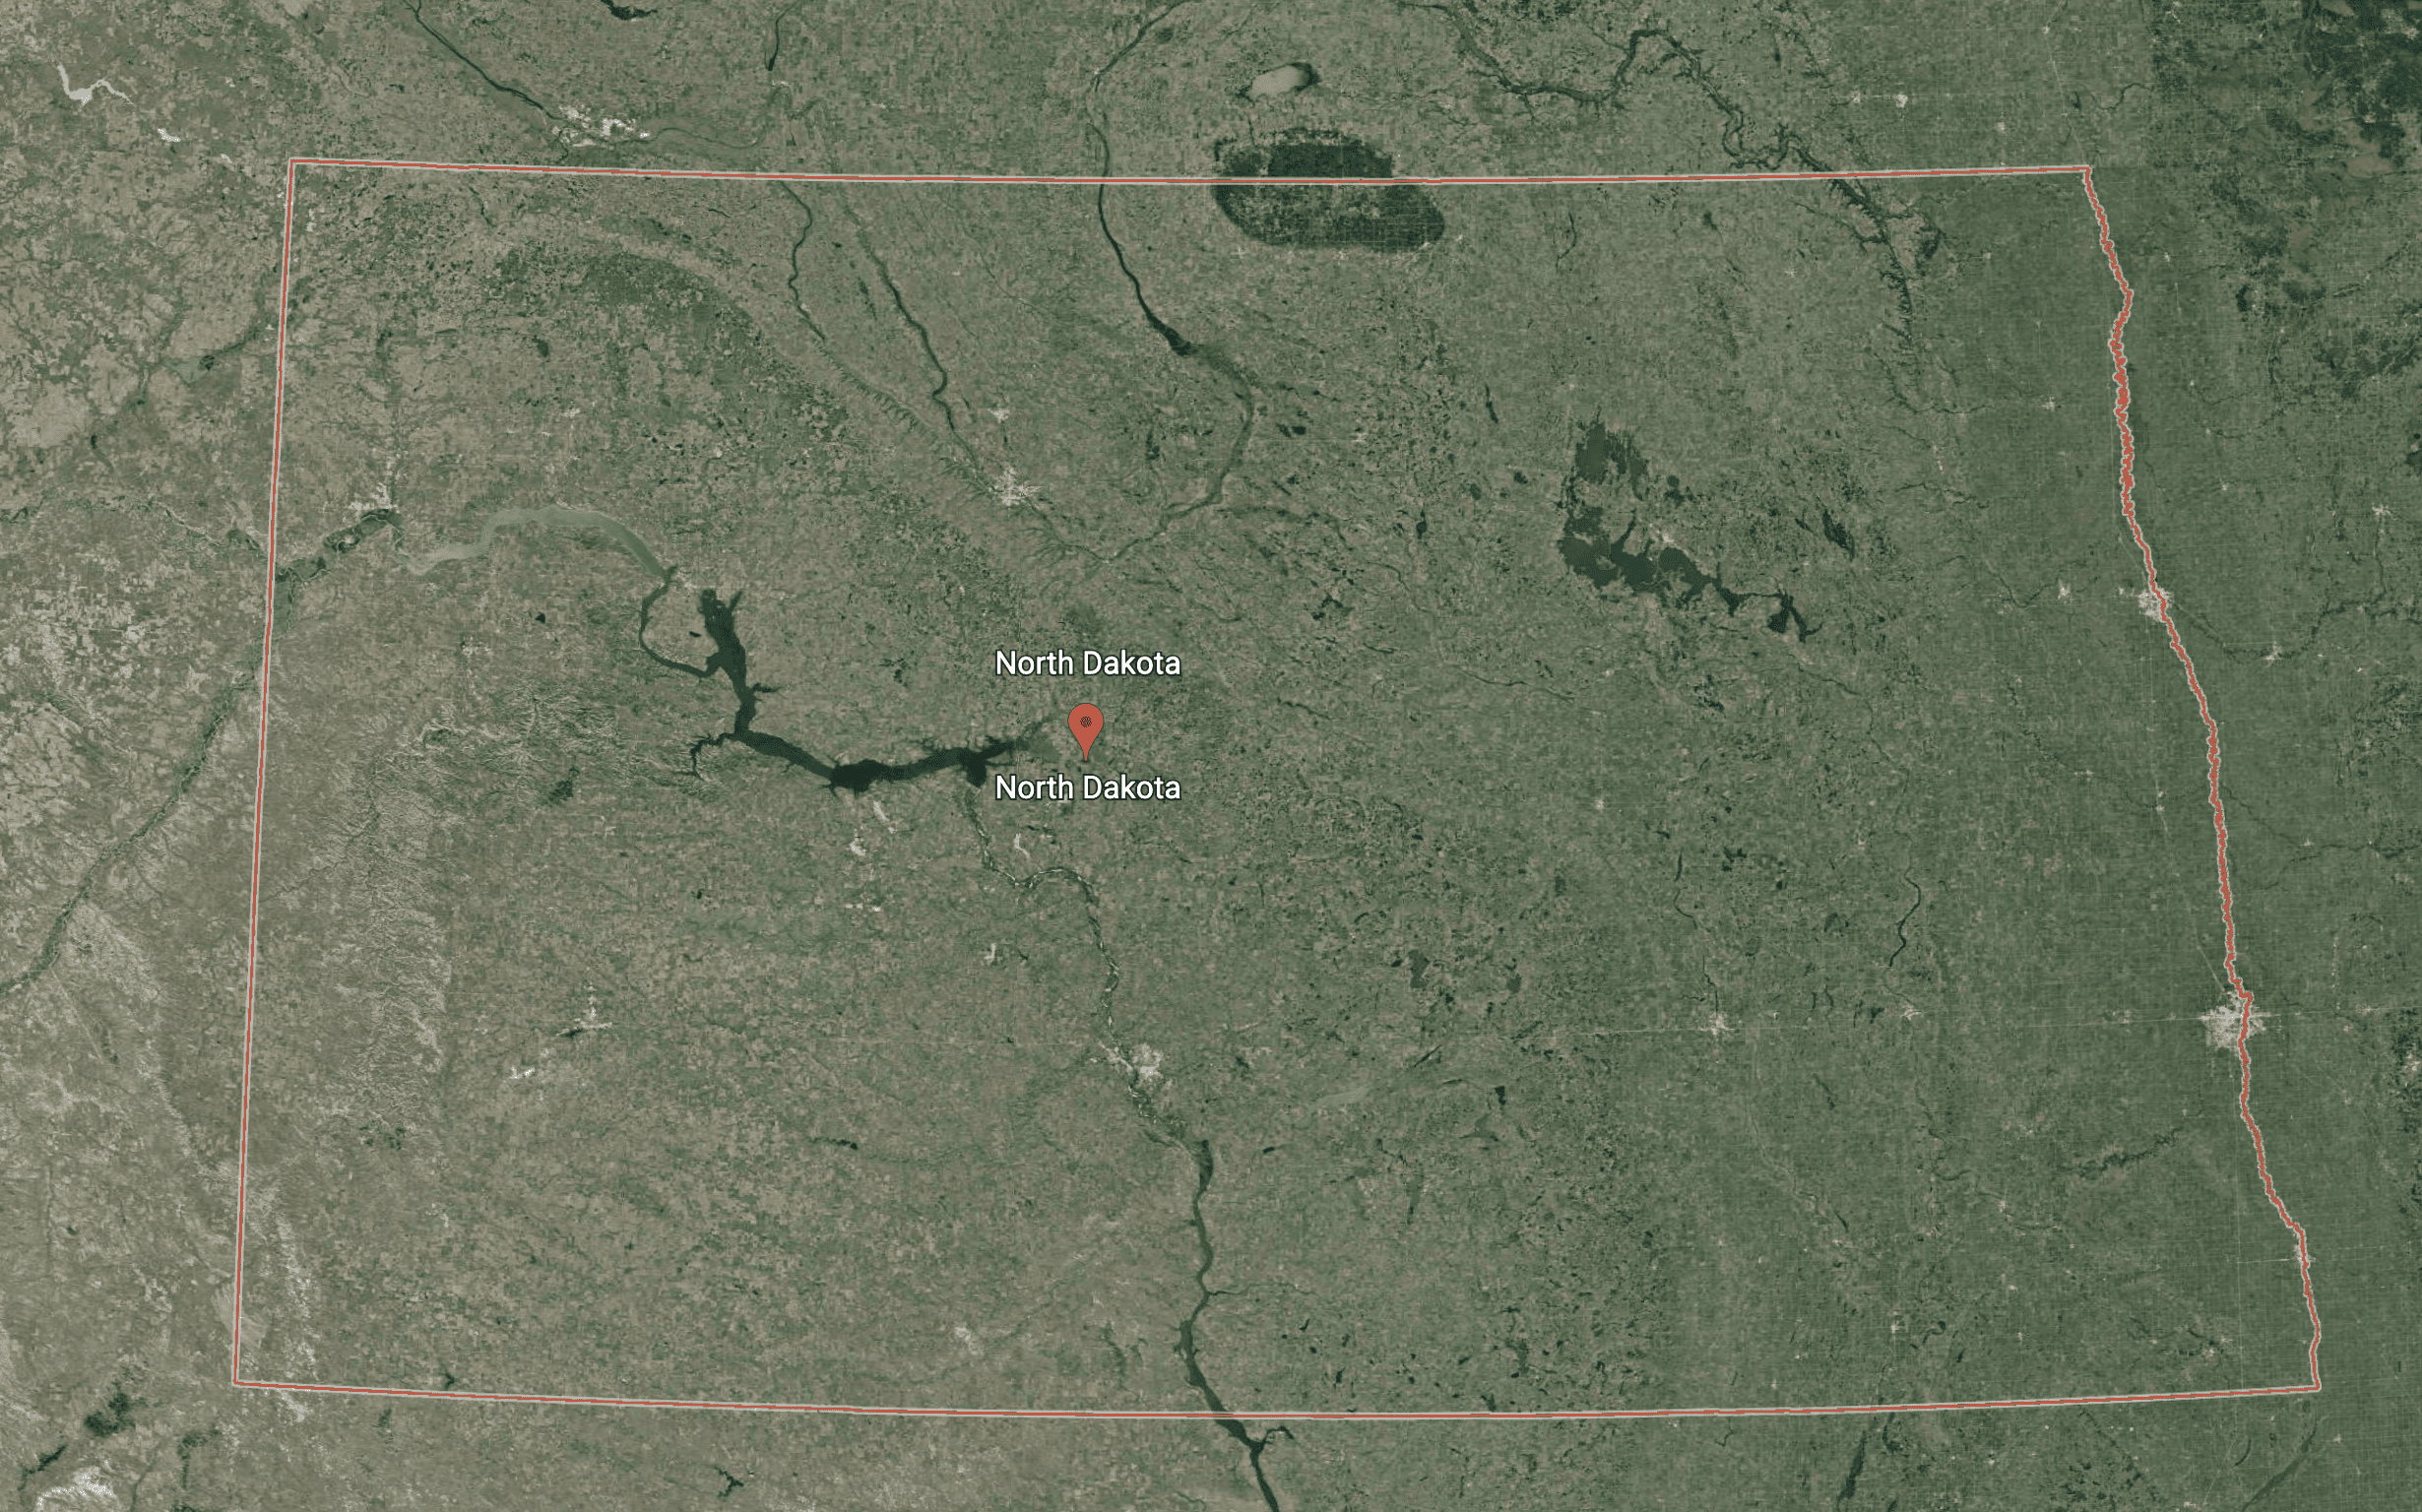 Satellite overhead image of North Dakota from Google Earth 2022